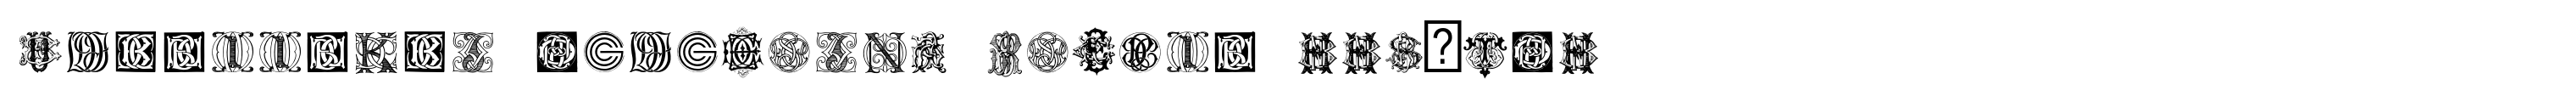 Intellecta Monograms Triple BBA-EMB